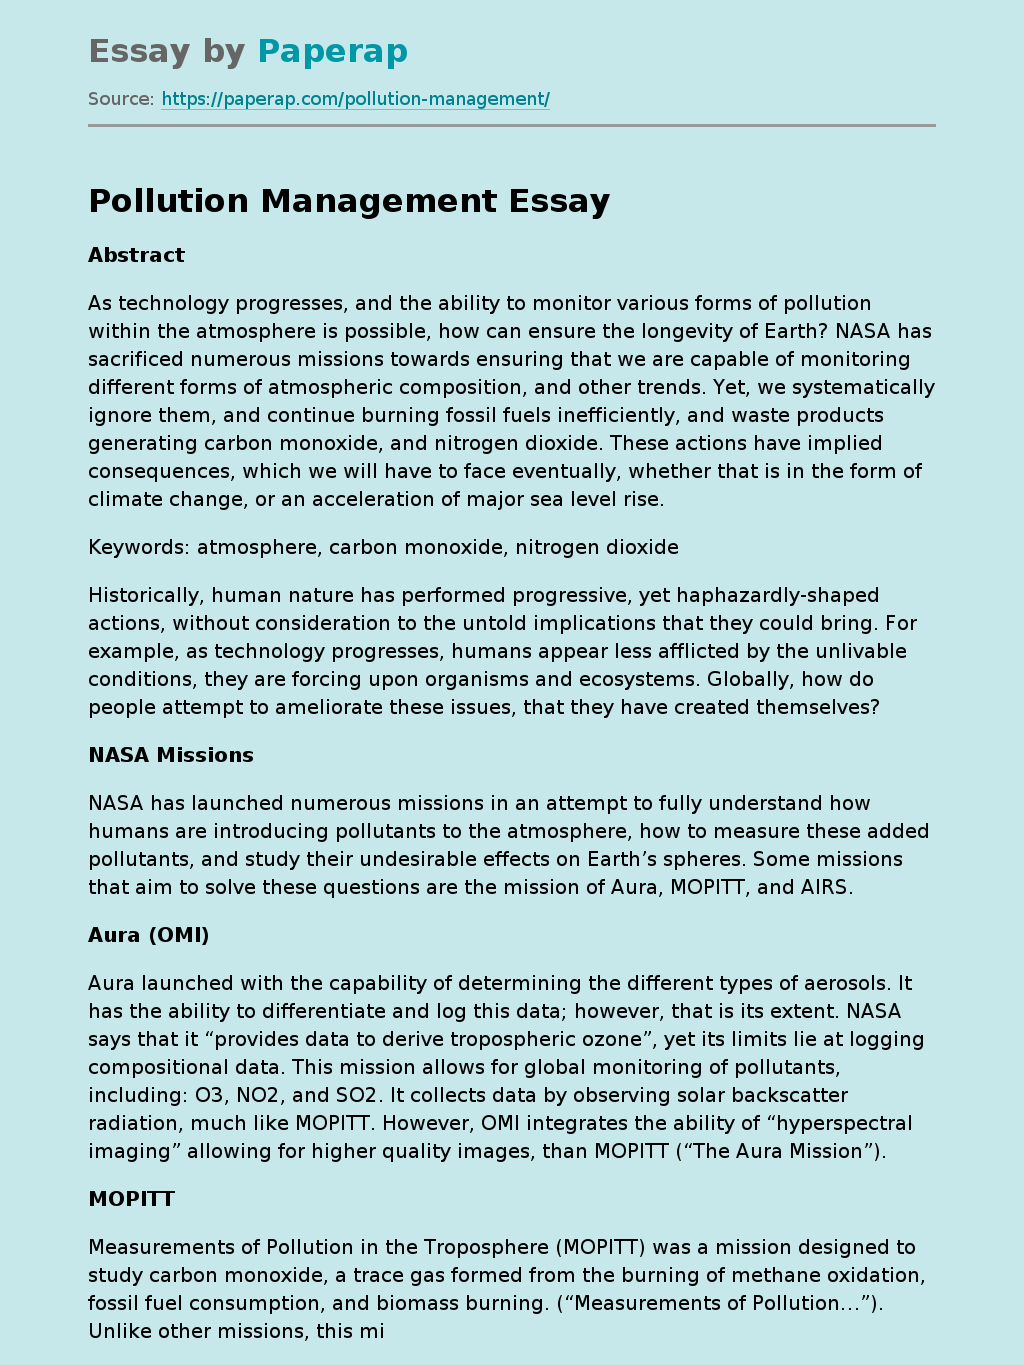 Pollution Management